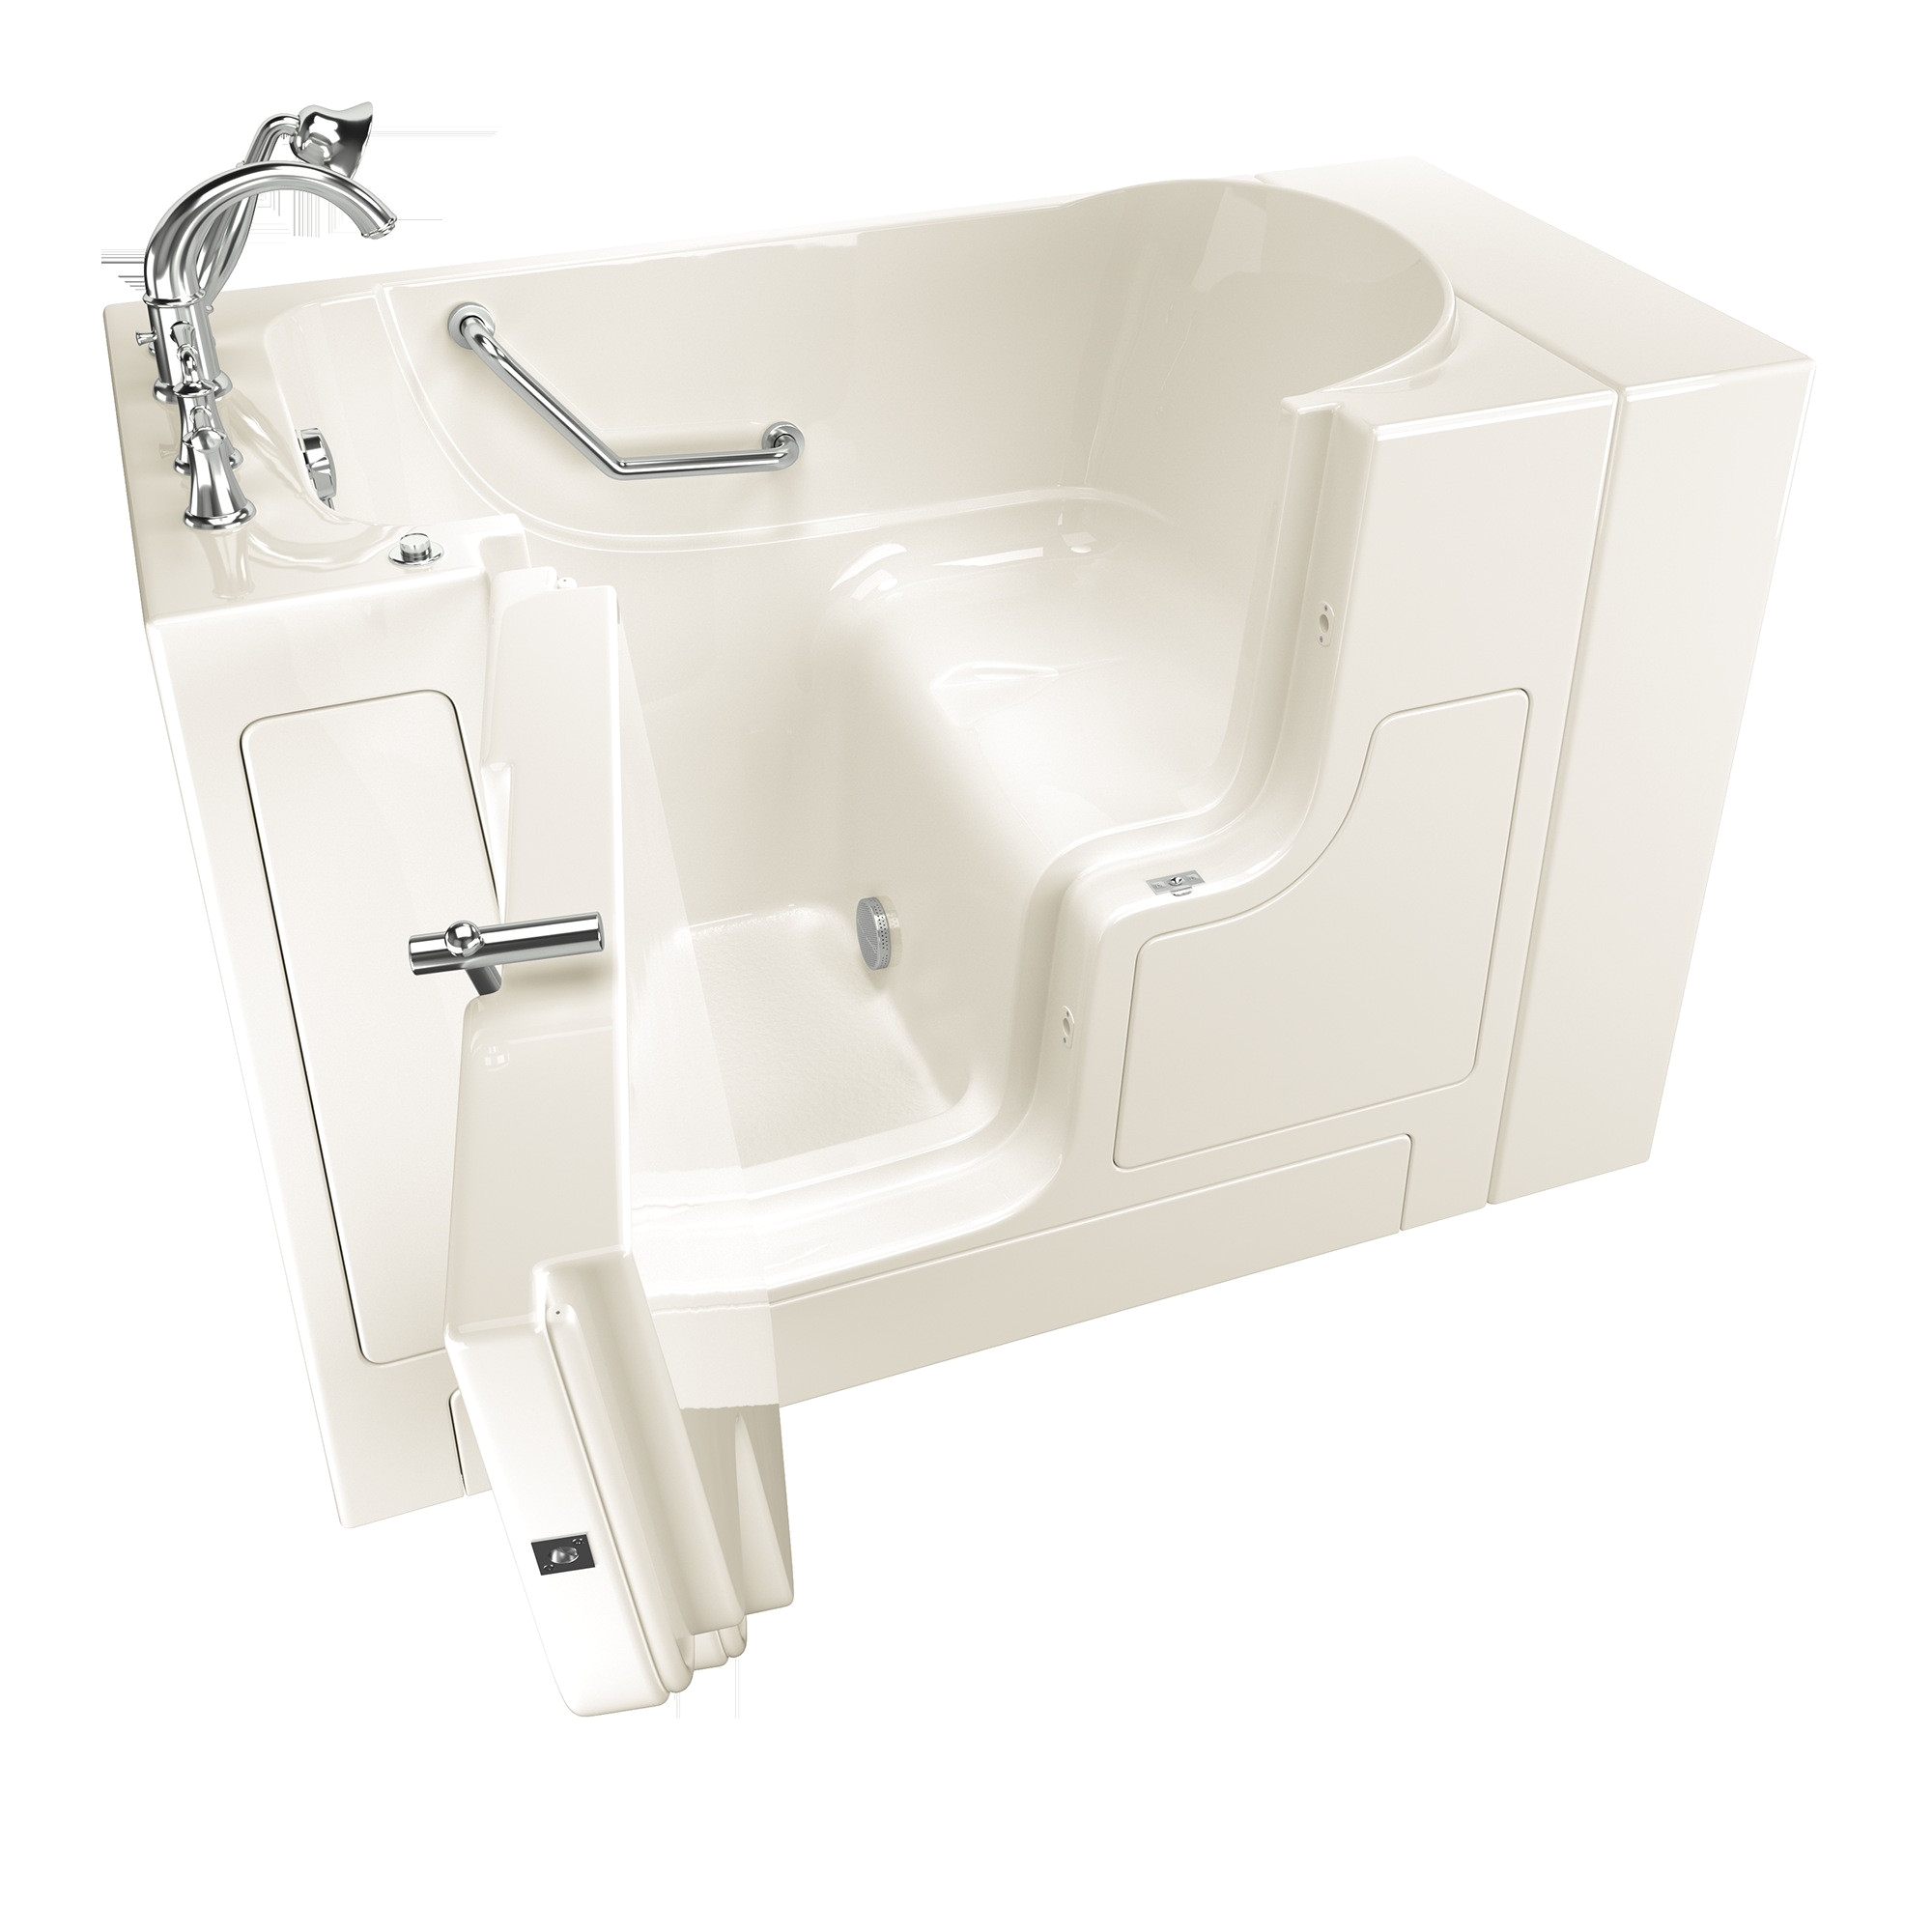 52 bathtub luxury how to fix bathtub faucet handle h sink bathroom faucets repair i 0d